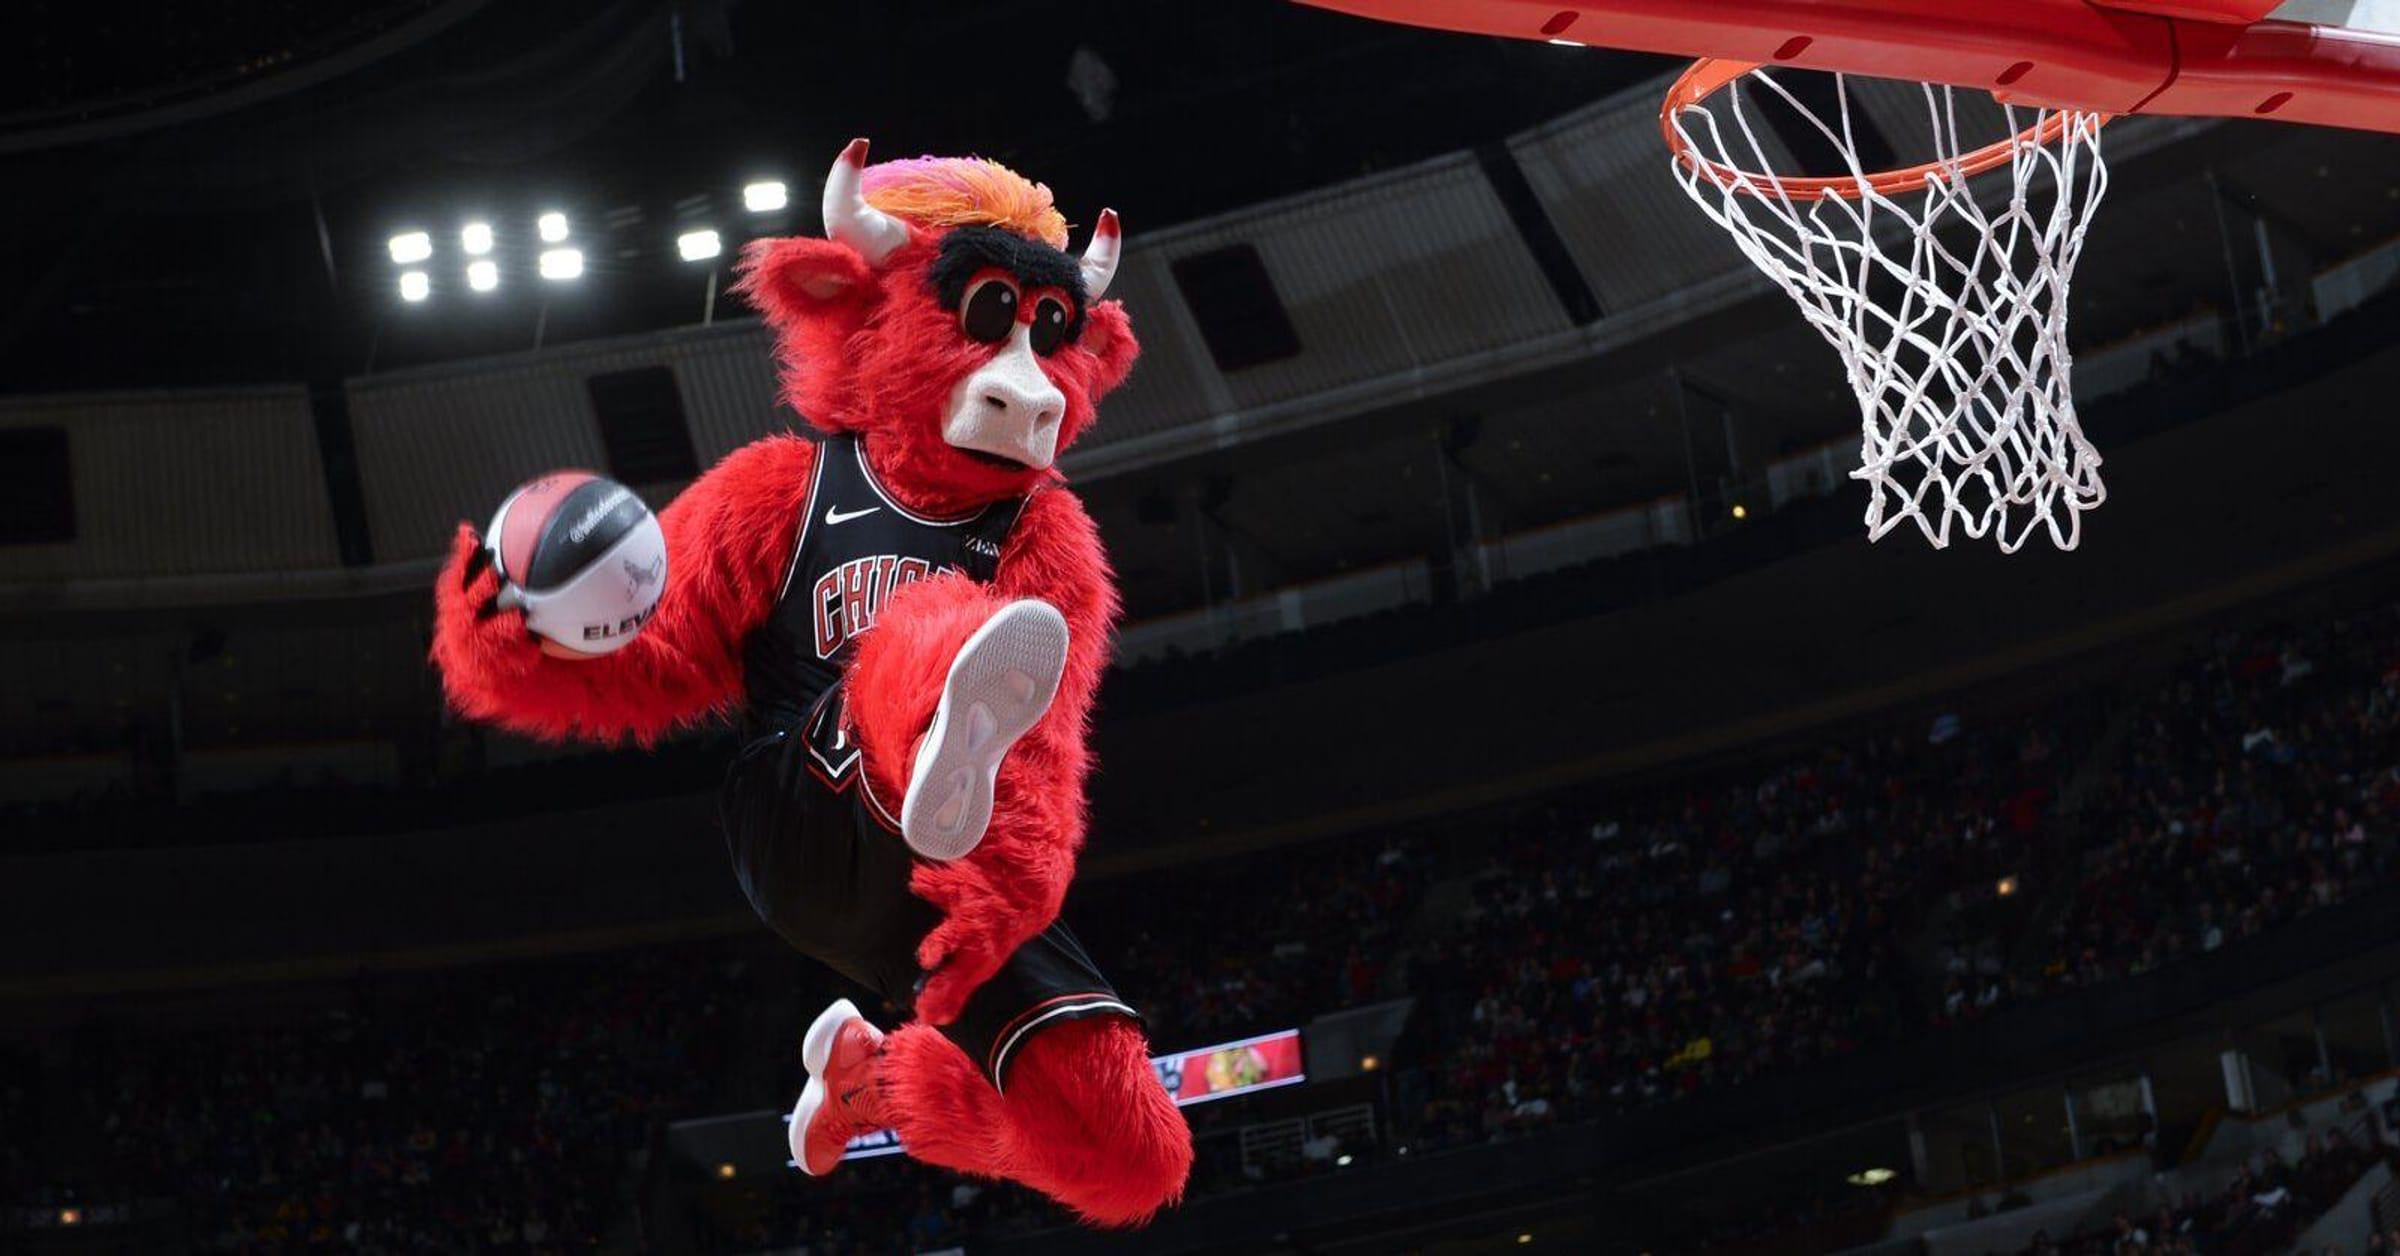 Grizz (Memphis Grizzlies), the #1 mascot in the NBA